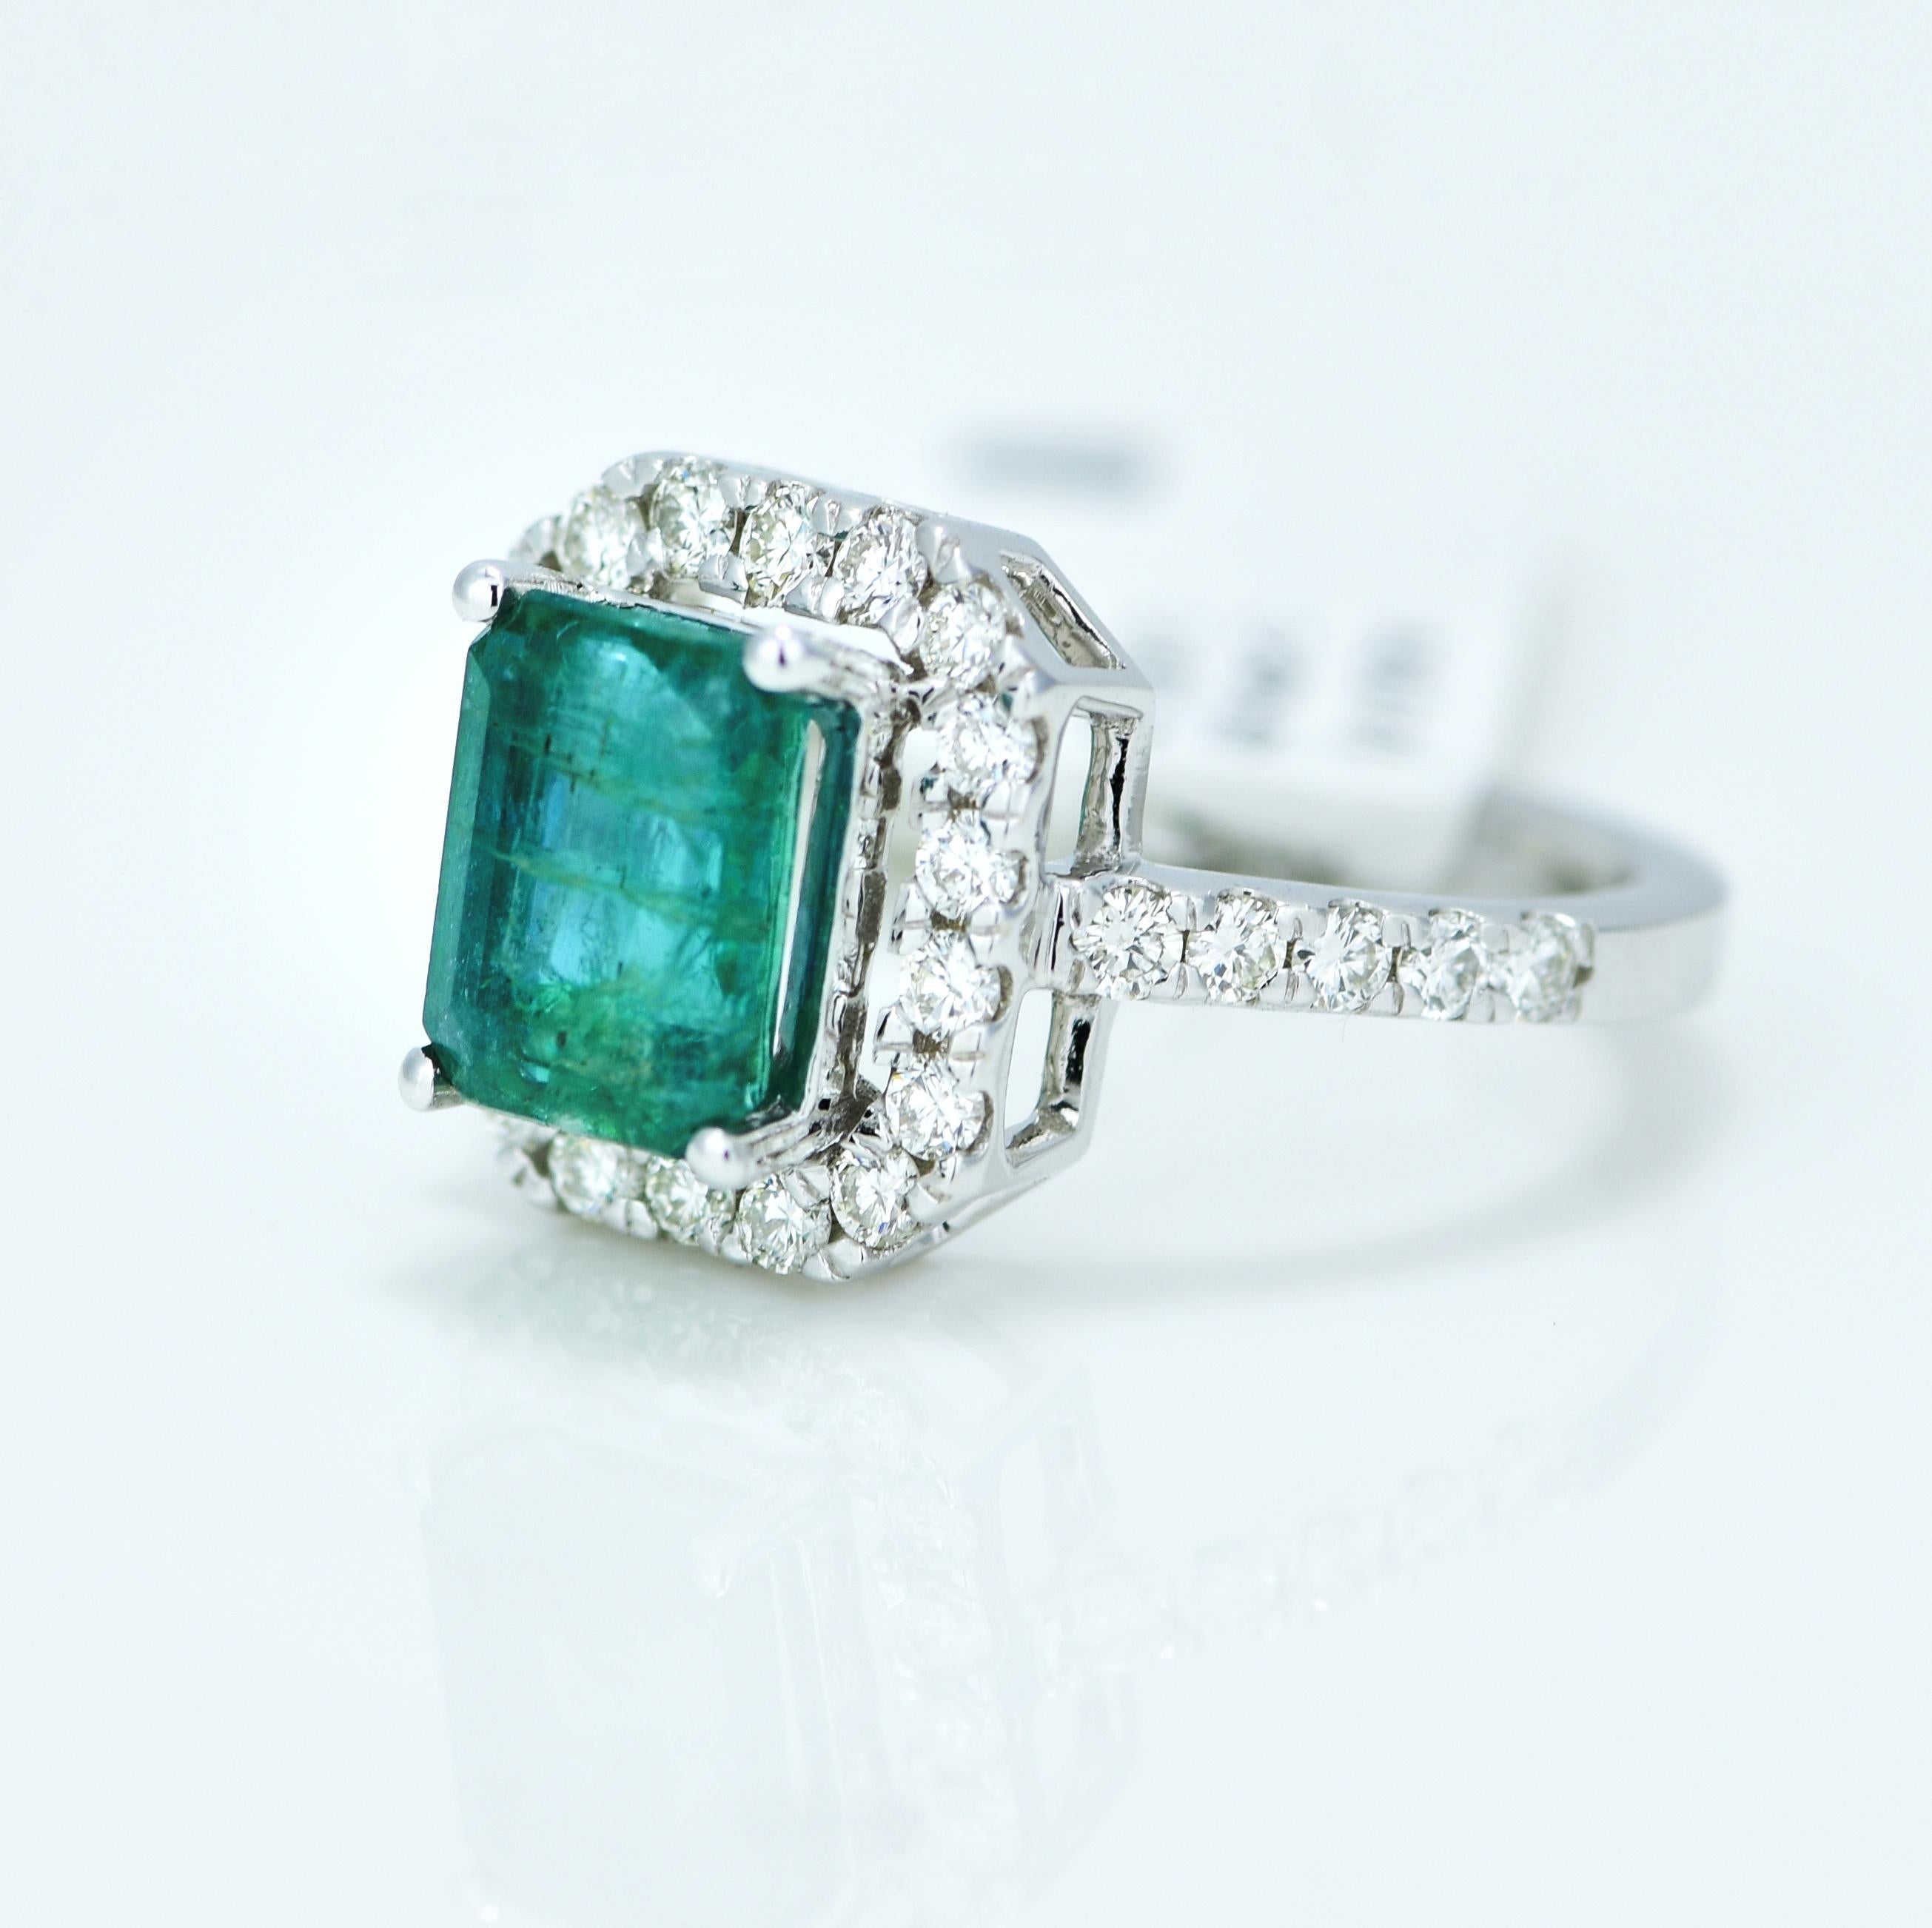 Stunning Green Emerald and Diamond Halo Ring.

Centre Stone - Natural Green Emerald

Centre Stone Shape - Cut Cornered Rectangular

Centre Stone Weight - 2.11 Carat, 

Centre Stone Origin - Zambian (Minor Oil)

Total Number of Diamonds -